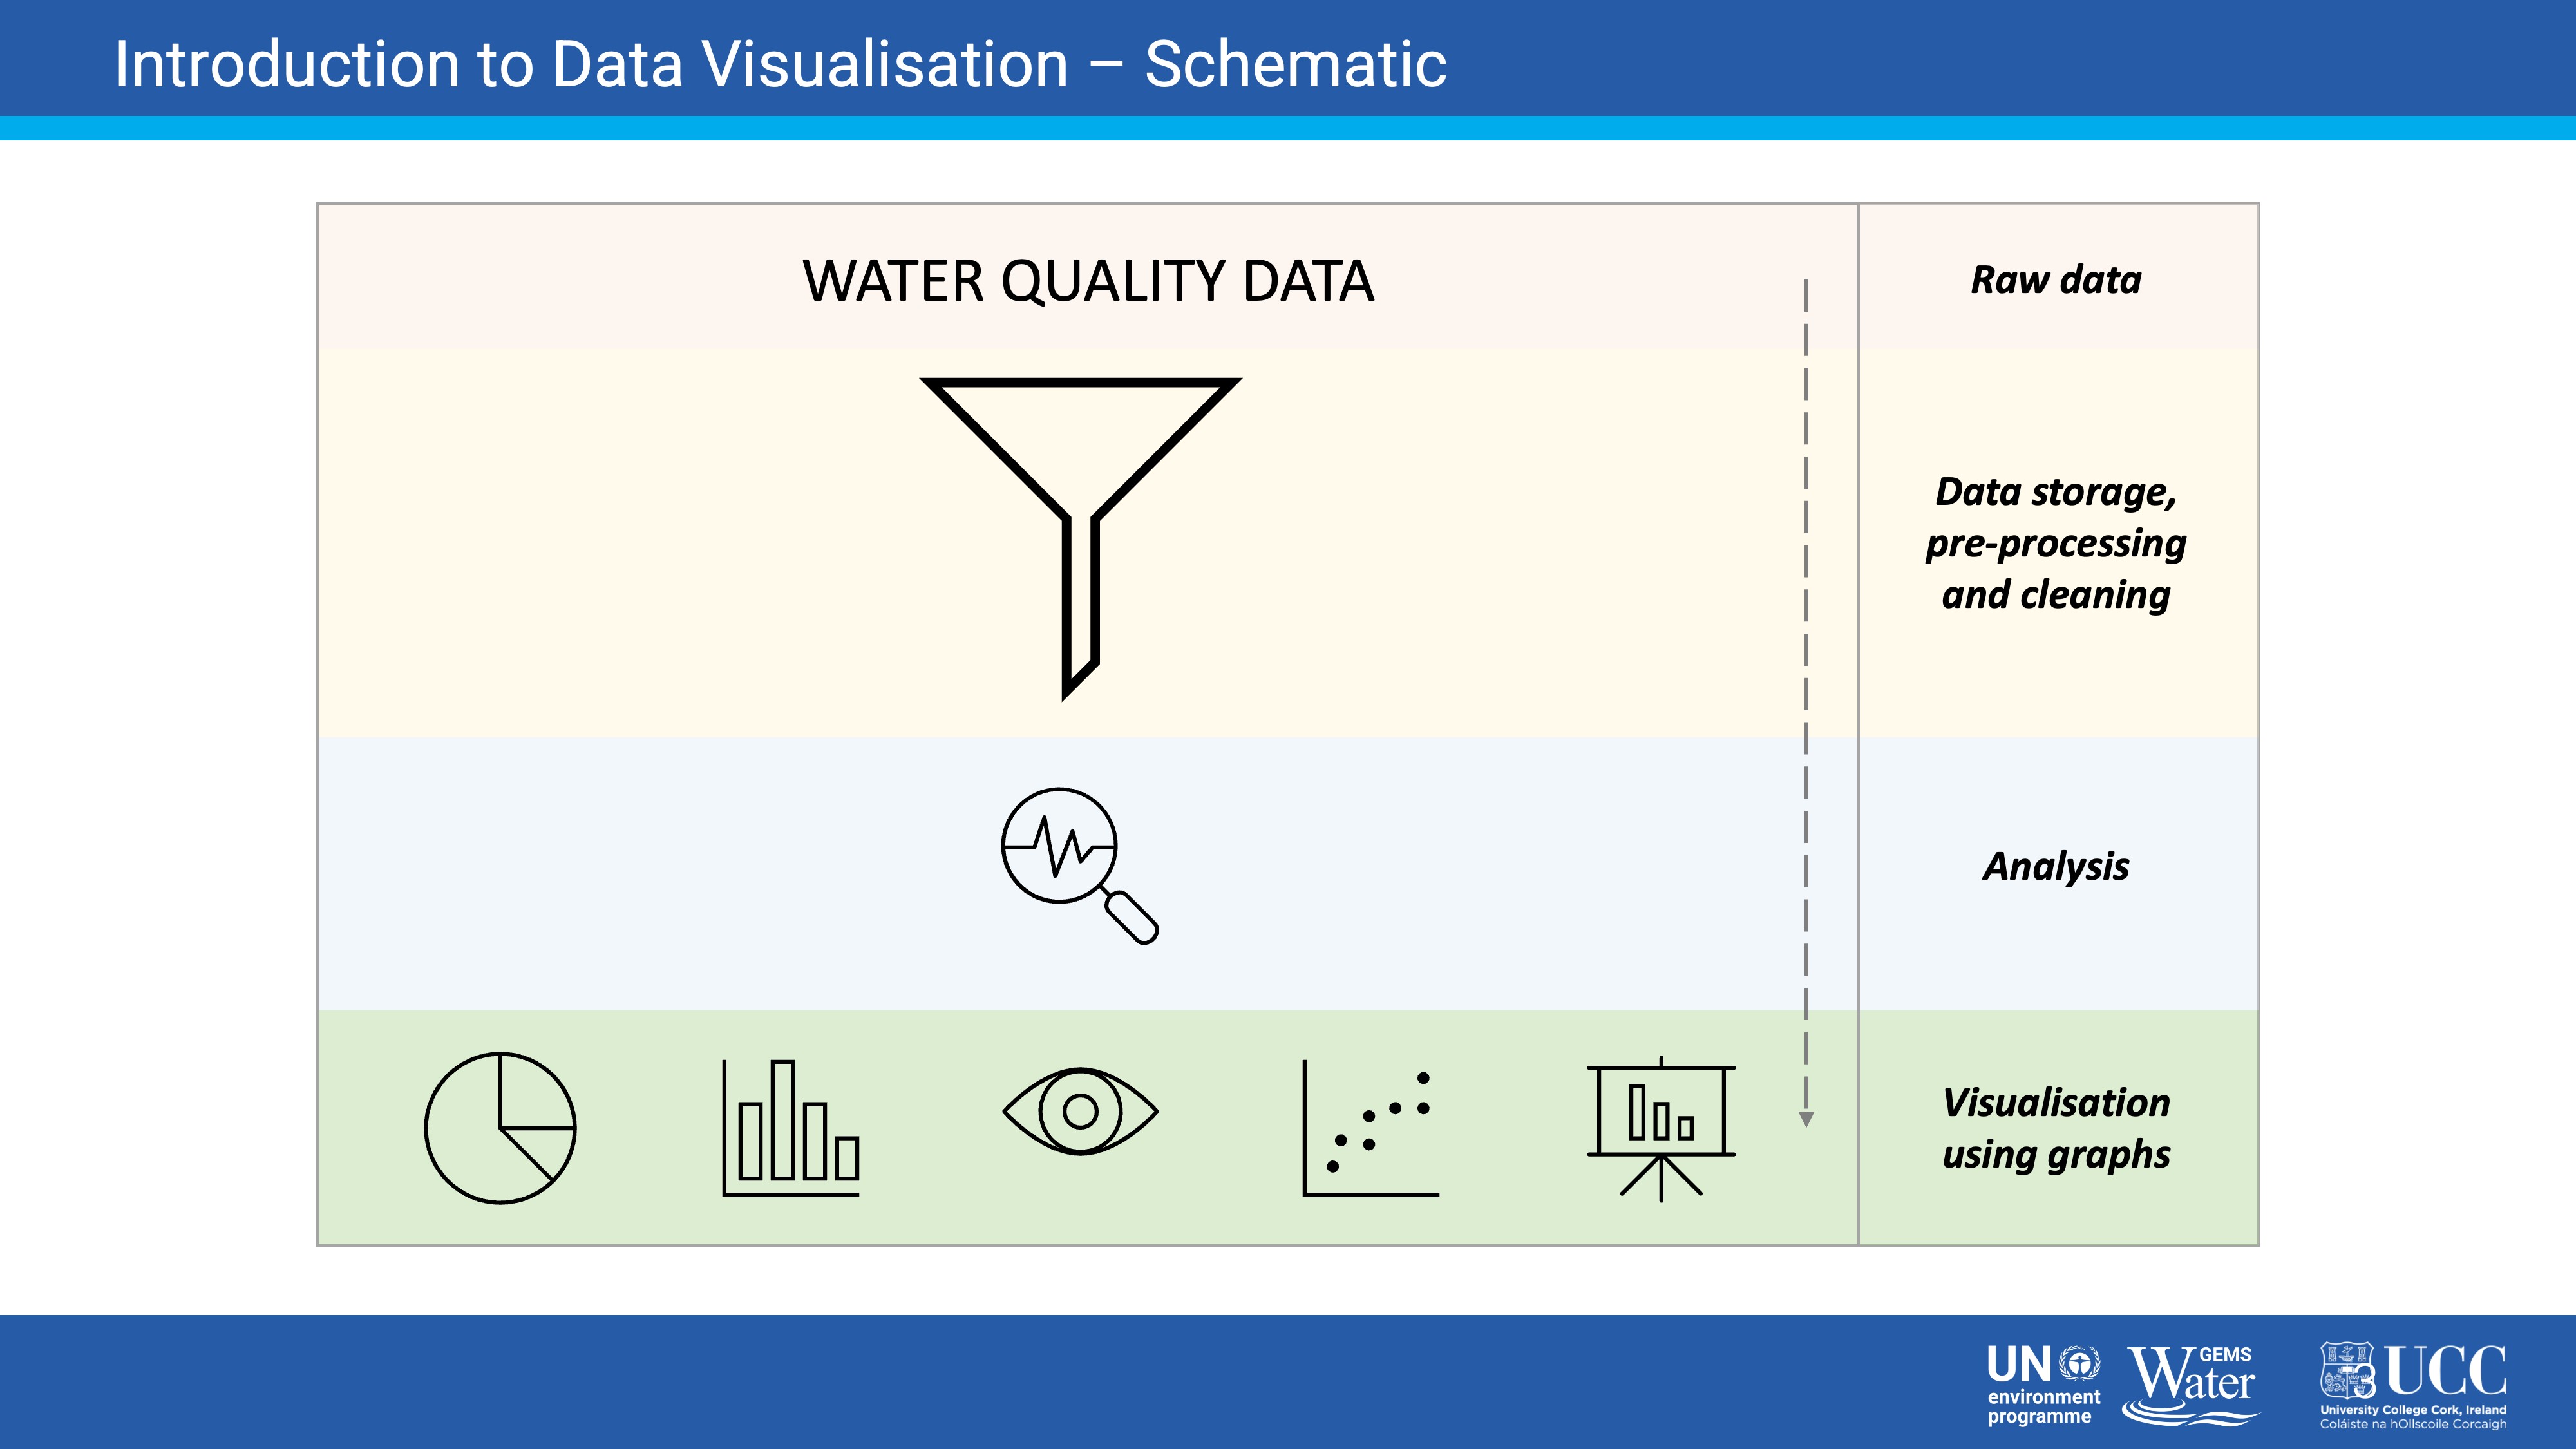 GEMS/Water CDC's Focus on Data